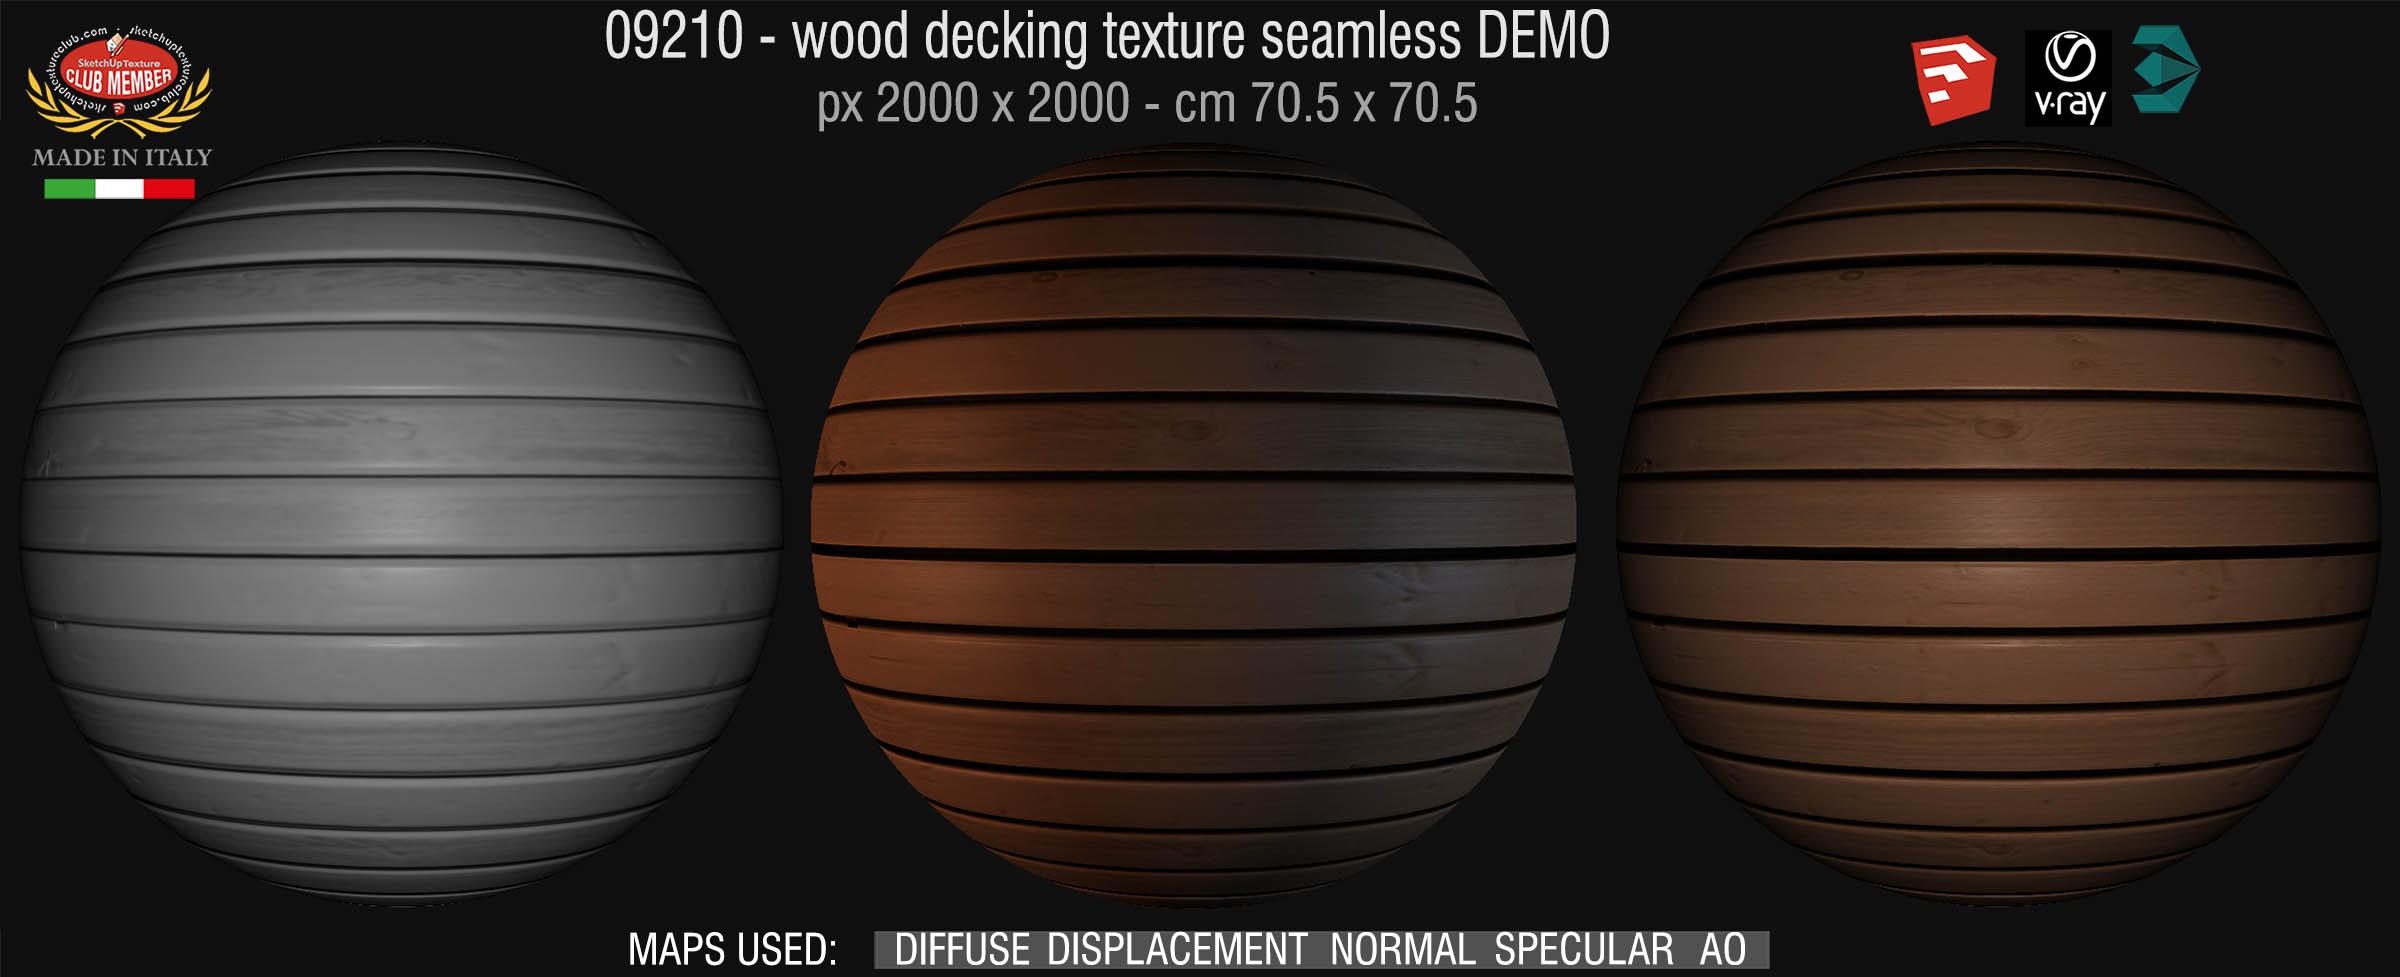 09210 HR Wood decking texture seamless + maps DEMO